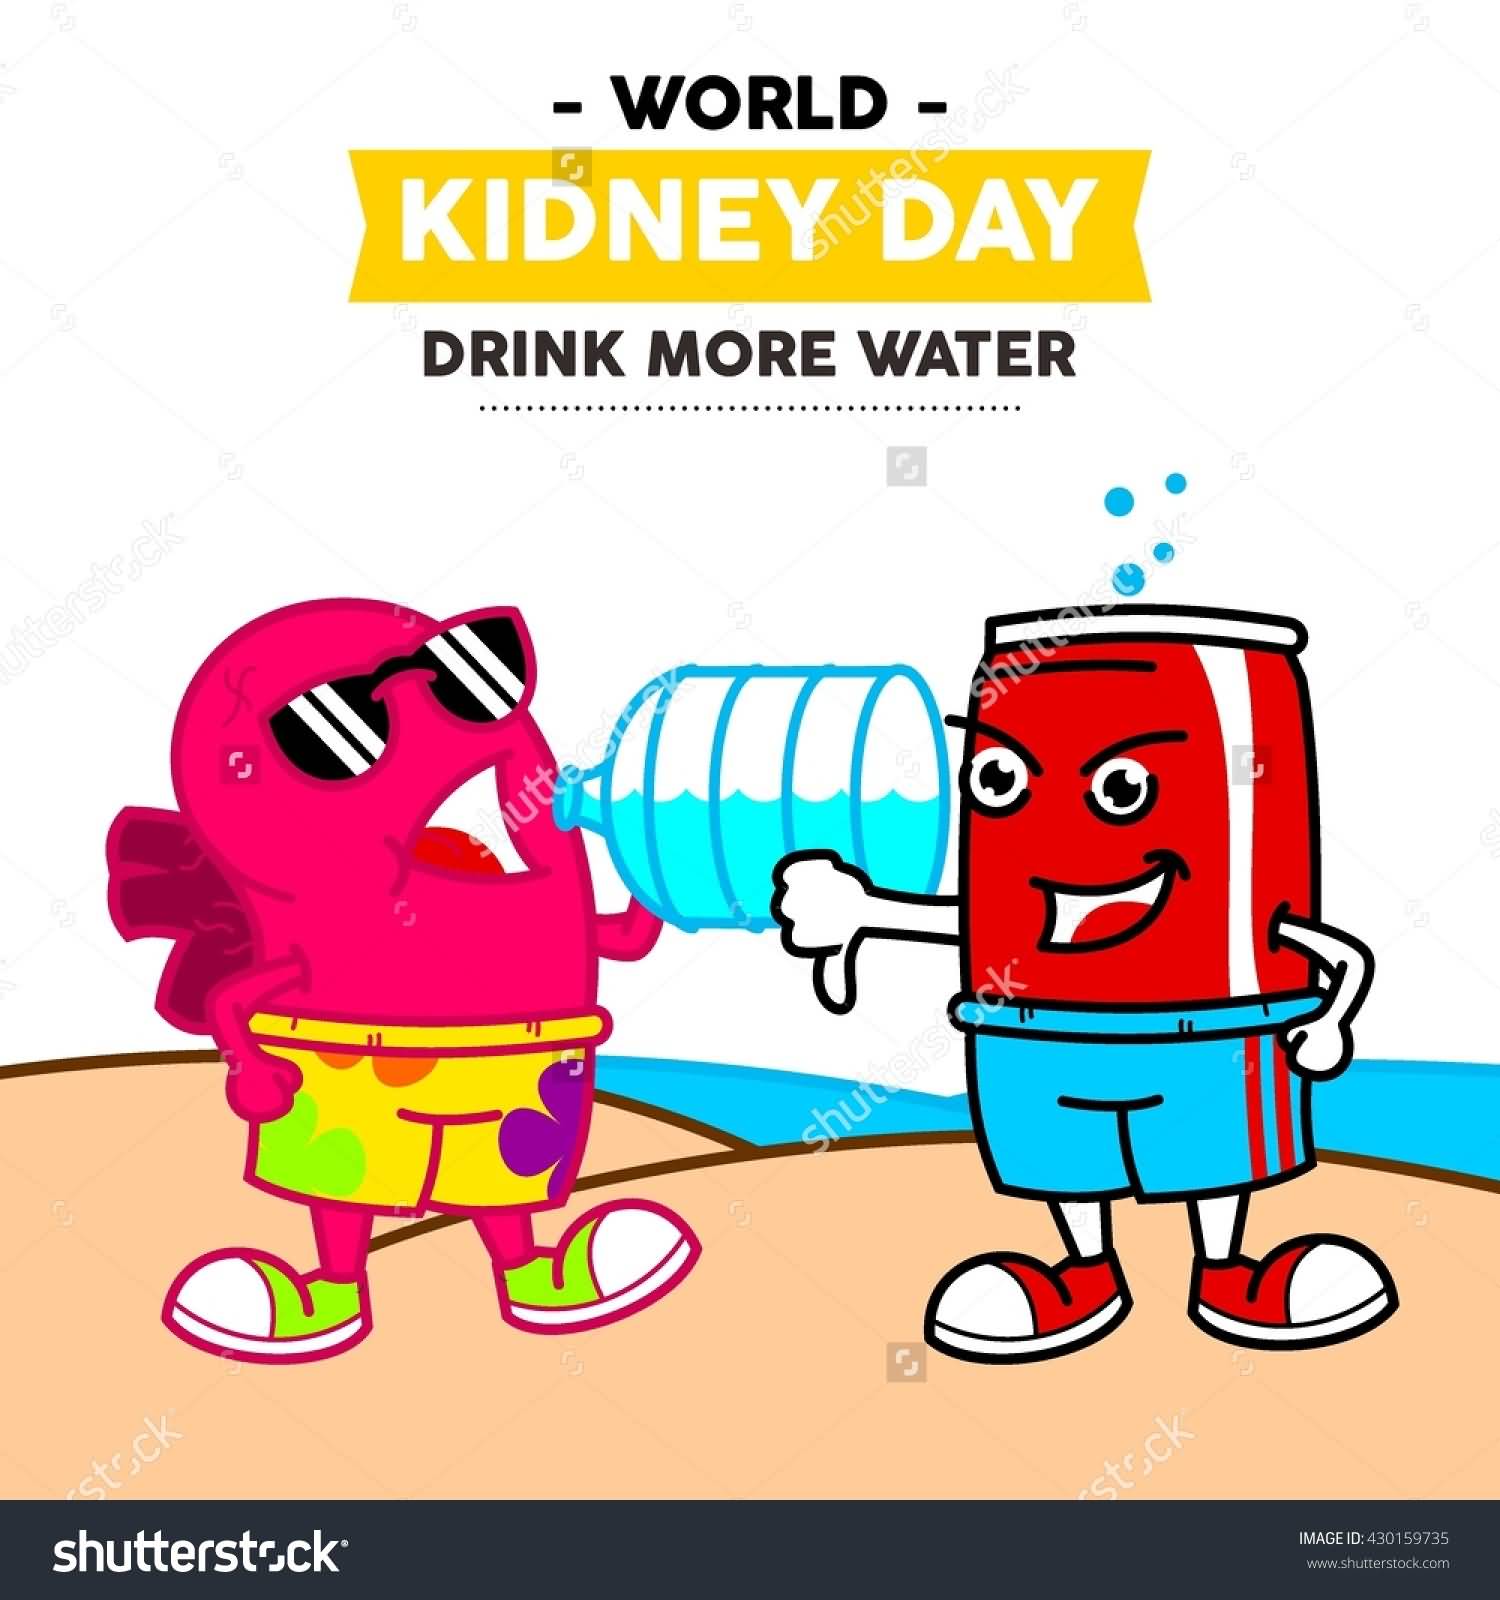 World Kidney Day Drink More Water Illustration